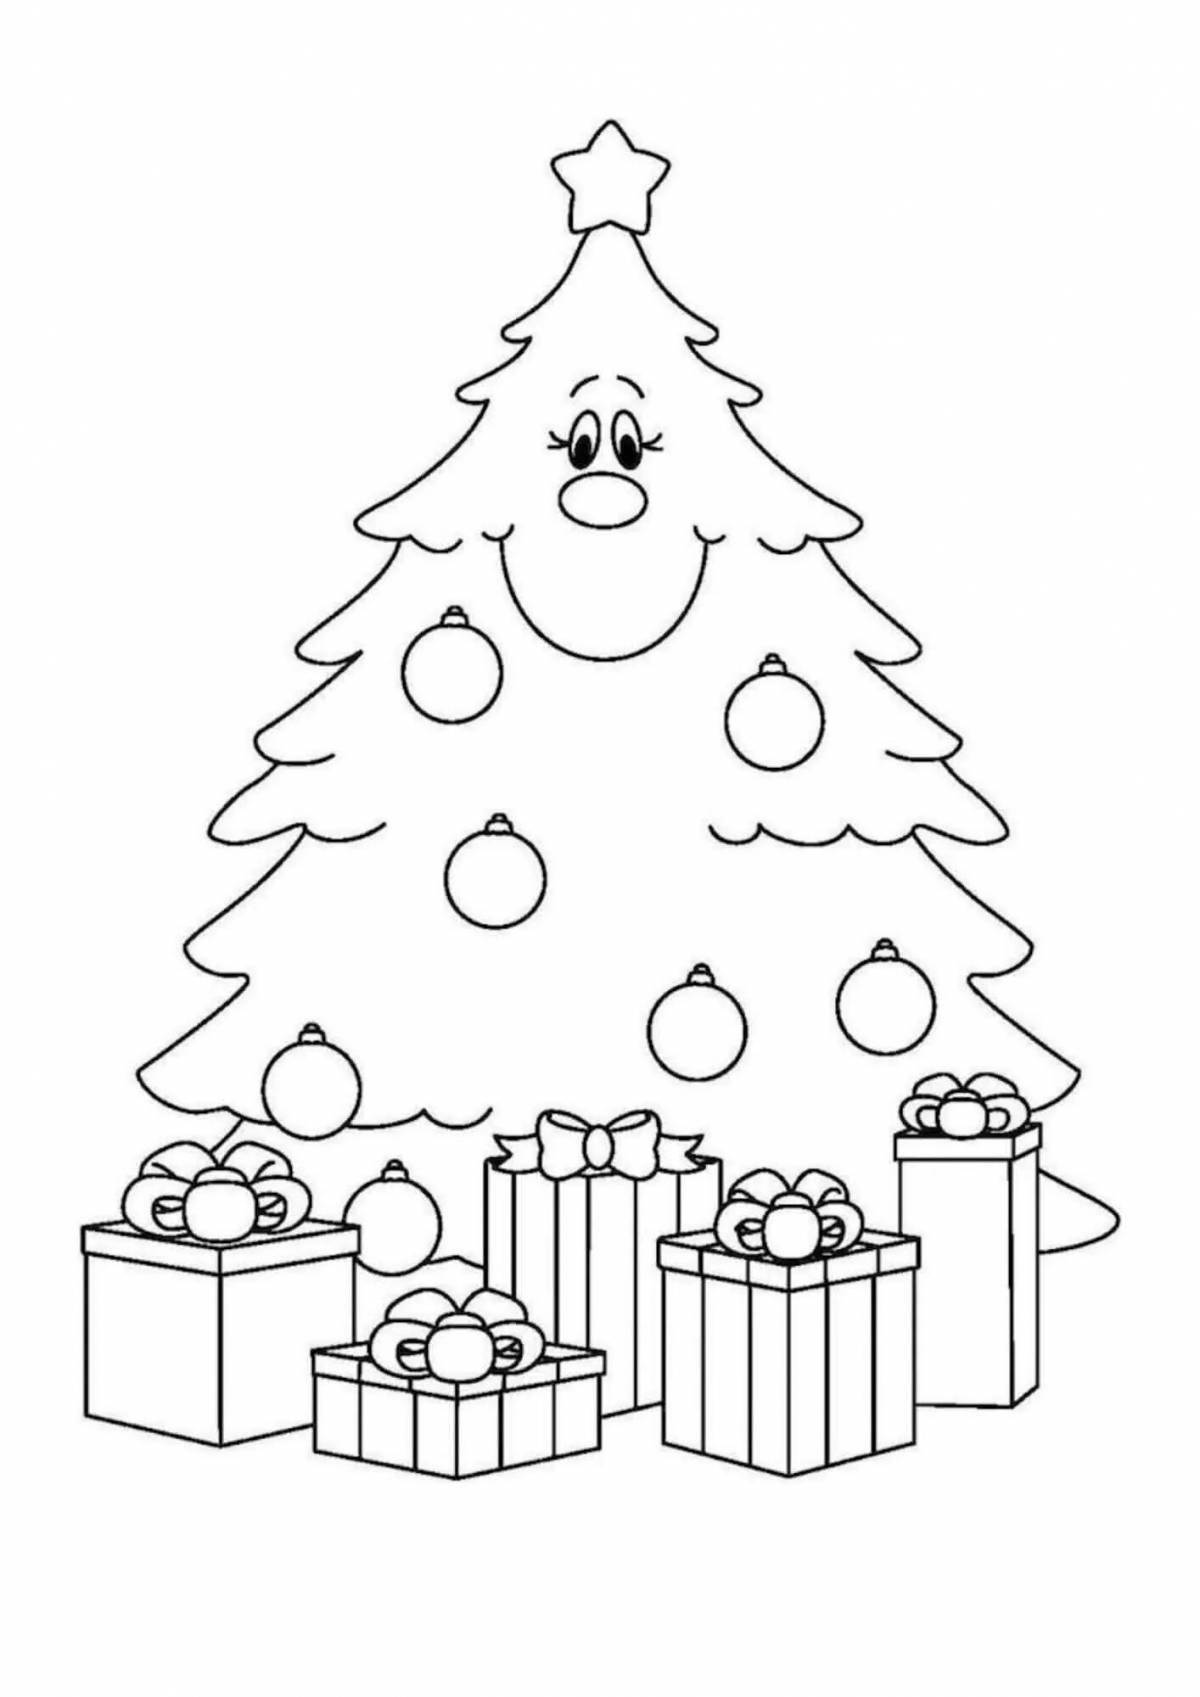 Fantastic Christmas tree with balls